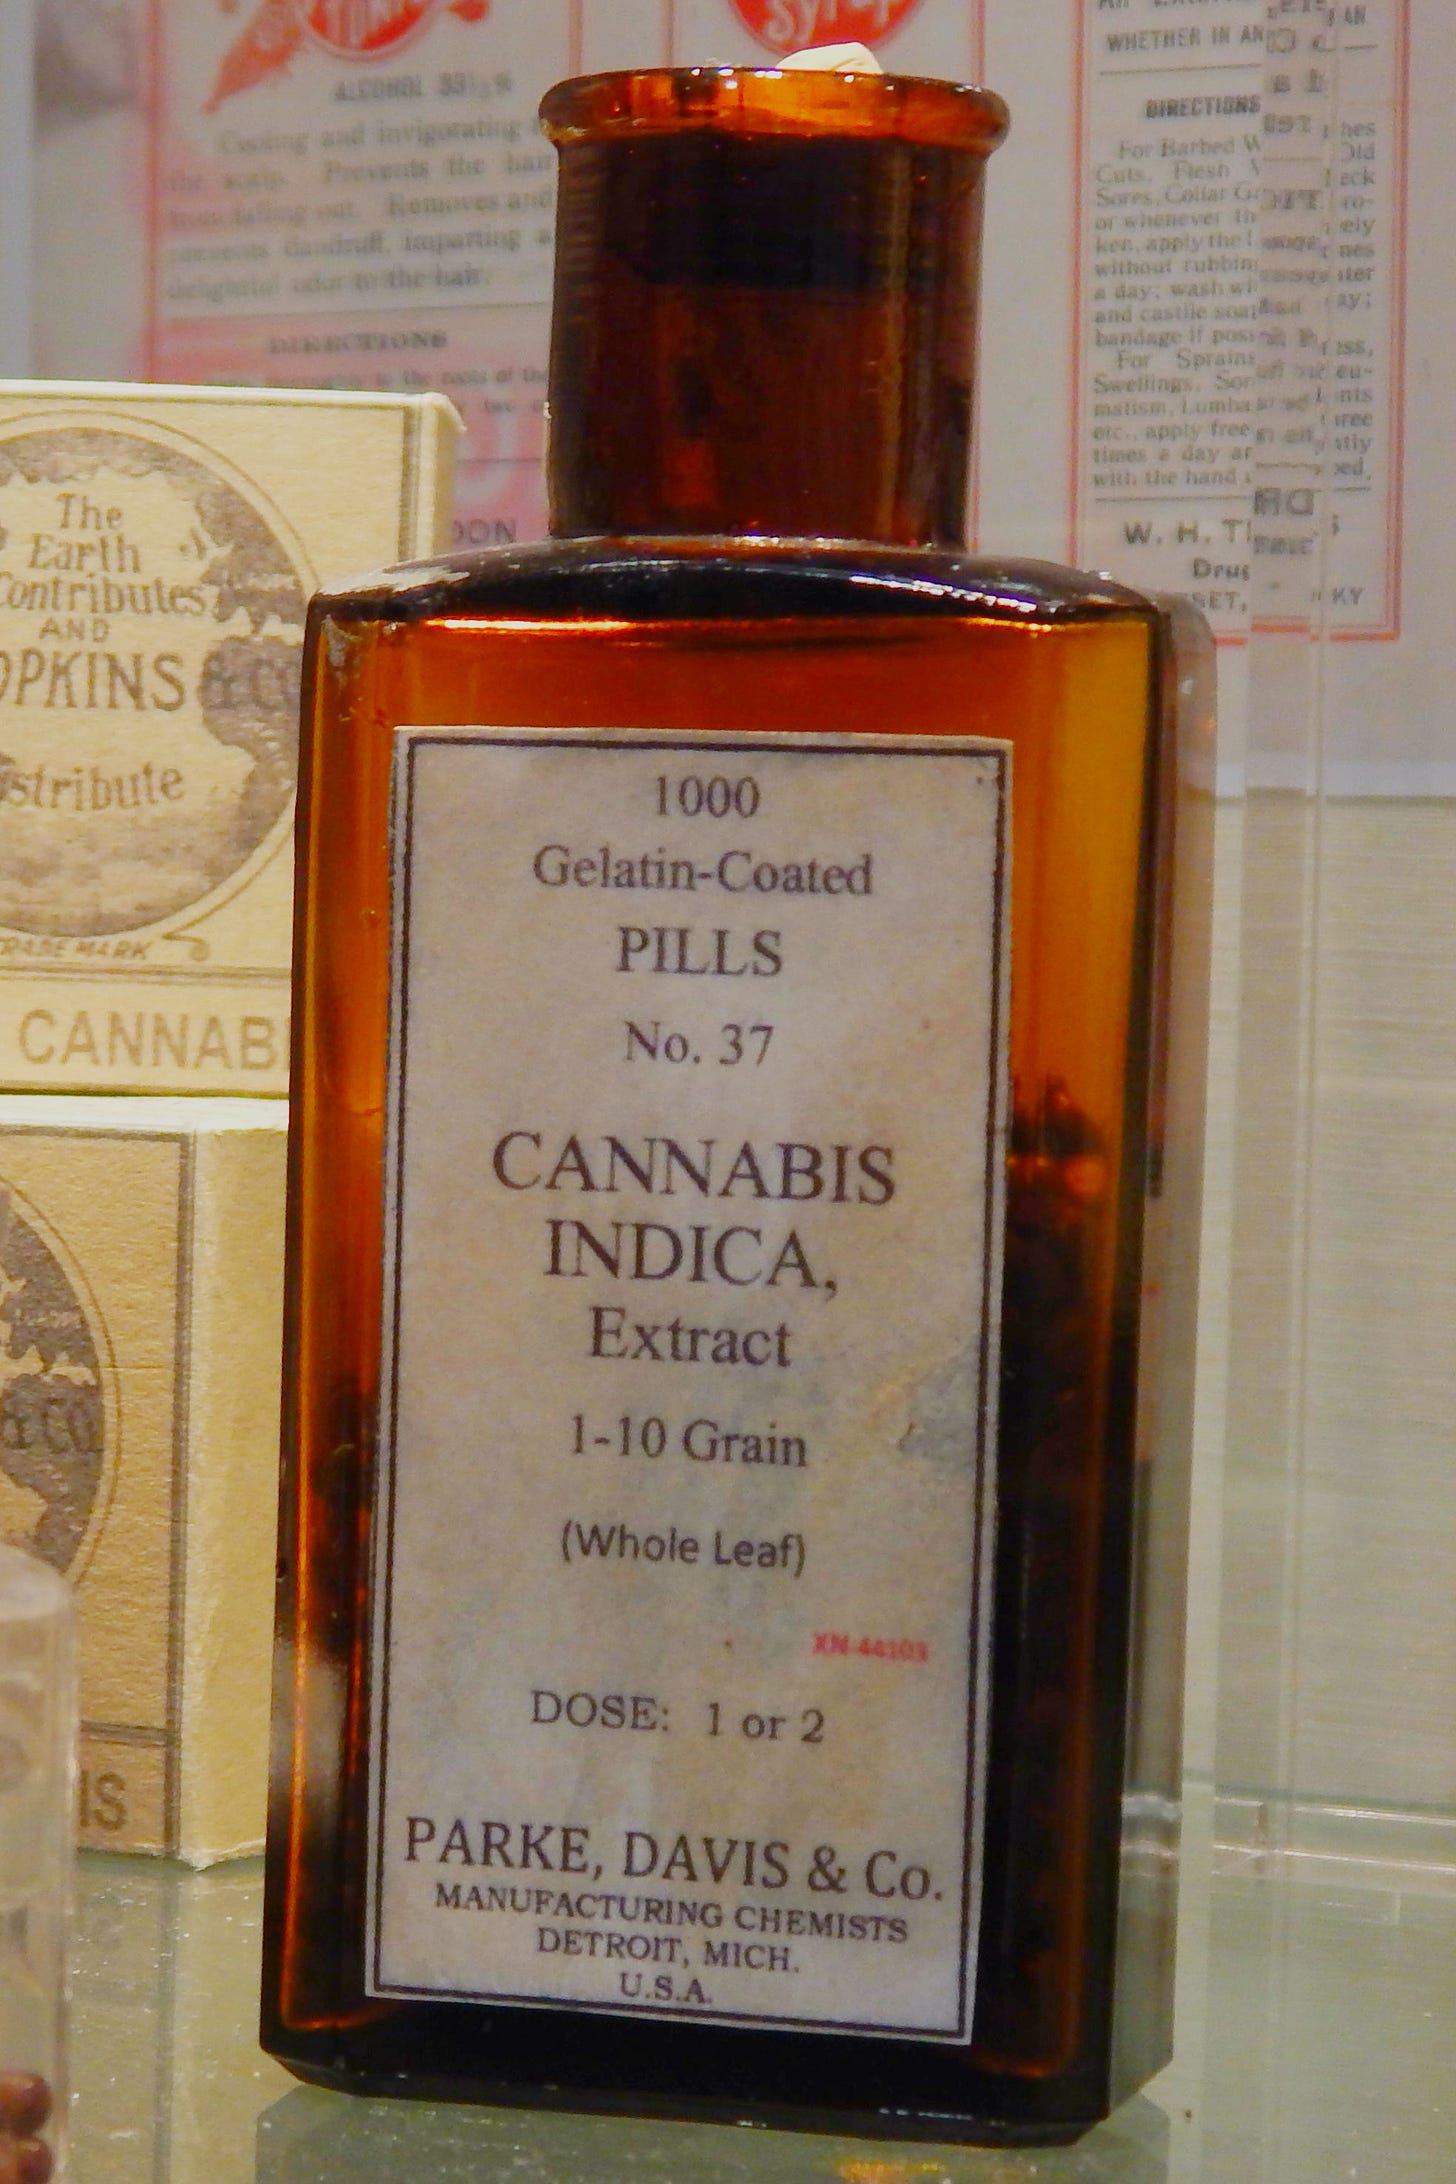 File:Old bottle of Parke Davis cannabis pills 2.jpg - Wikimedia Commons